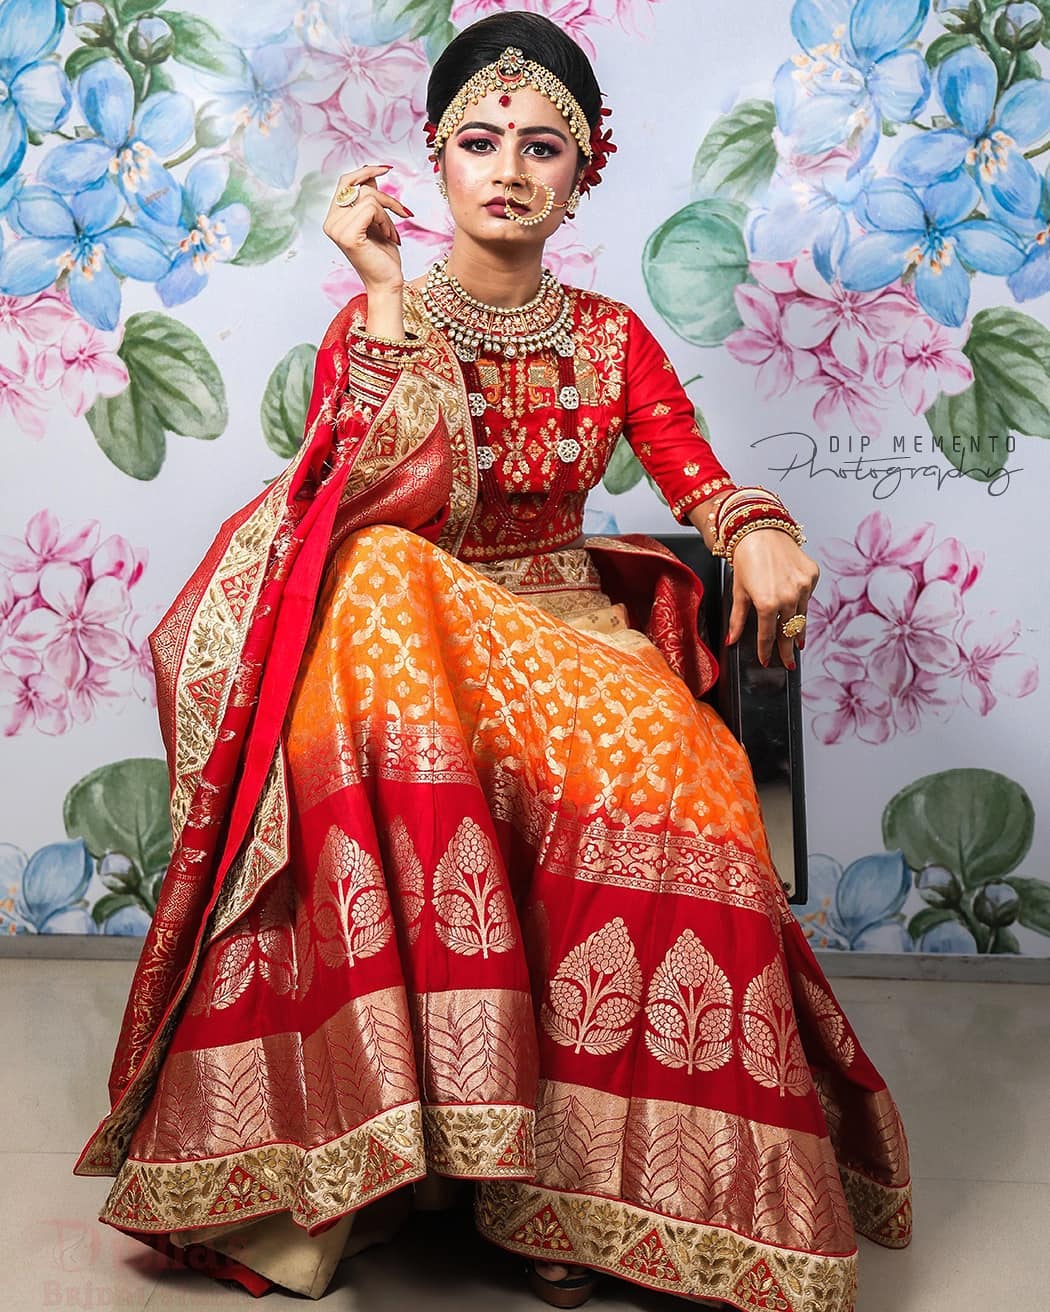 Dear Bride, your attitude says it all.....
.
.
▪︎ captured by @dip_memento_photography
▪︎ Bridal Makeup by @dishabeautysaloonacademynikol
▪︎ InFrame Binita
▪︎ outfit  @sons_boutique5 .
.
.
#brides #sisterbrides #bridetobe
#coolbrides #bigfatindianwedding #bridemakeup #indianwedding #photography #weddings #indianwedding
#dipmementophotography #9924227745 #loveformakeup #makeuplove #makeupartist #makeup #ahmedabad #candidportraits #indianbride #indianfashionblogger #sisterstogether #sisterfriends #brides #funbrides •
@wedzo.in @indianstreetfashion @weddingz.in @indian_wedding_bliss
@dulhaanddulhan @thebridesofindia @indianweddings @weddingdream @indianweddingbuzz @shaadisaga @zo_wed @desiclassybrides @weddingwireindia @indiagramwedding @shaadisaga @indian__wedding @thebridesofindia
@weddingsutra @wedmegood @bridalaffairind @theweddingbrigade @weddingplz @weddingfables @indian_wedding_inspiration @eventilaindia @_punjabi_weddings